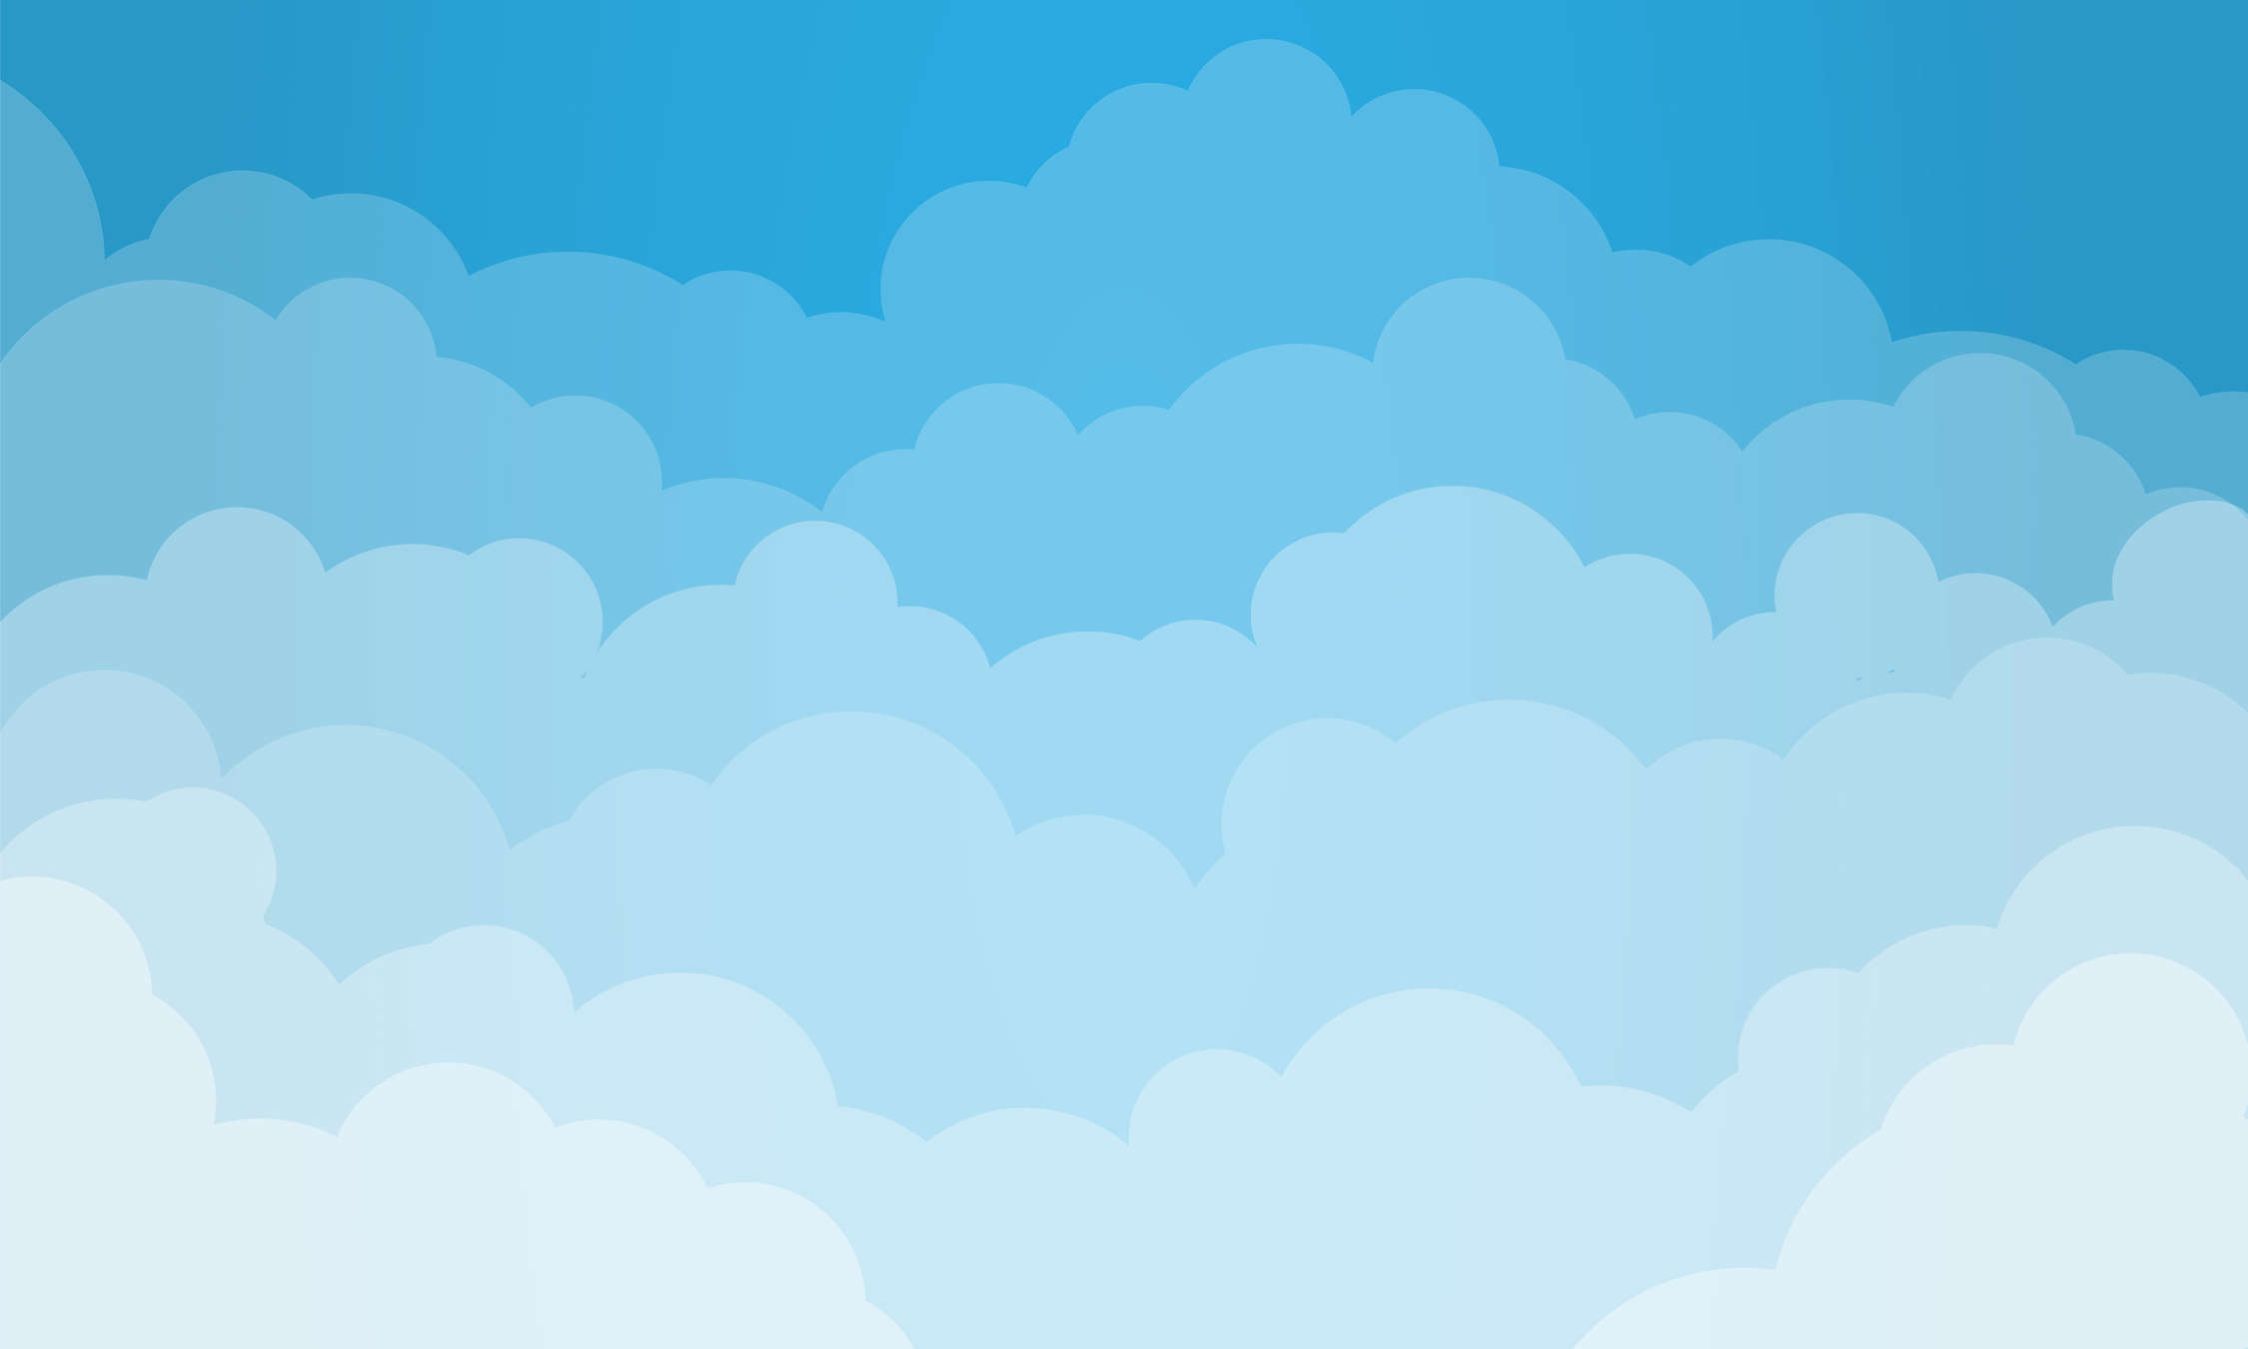             Fototapete Himmel mit Wolken im Comic-Stil – Glattes & mattes Vlies
        